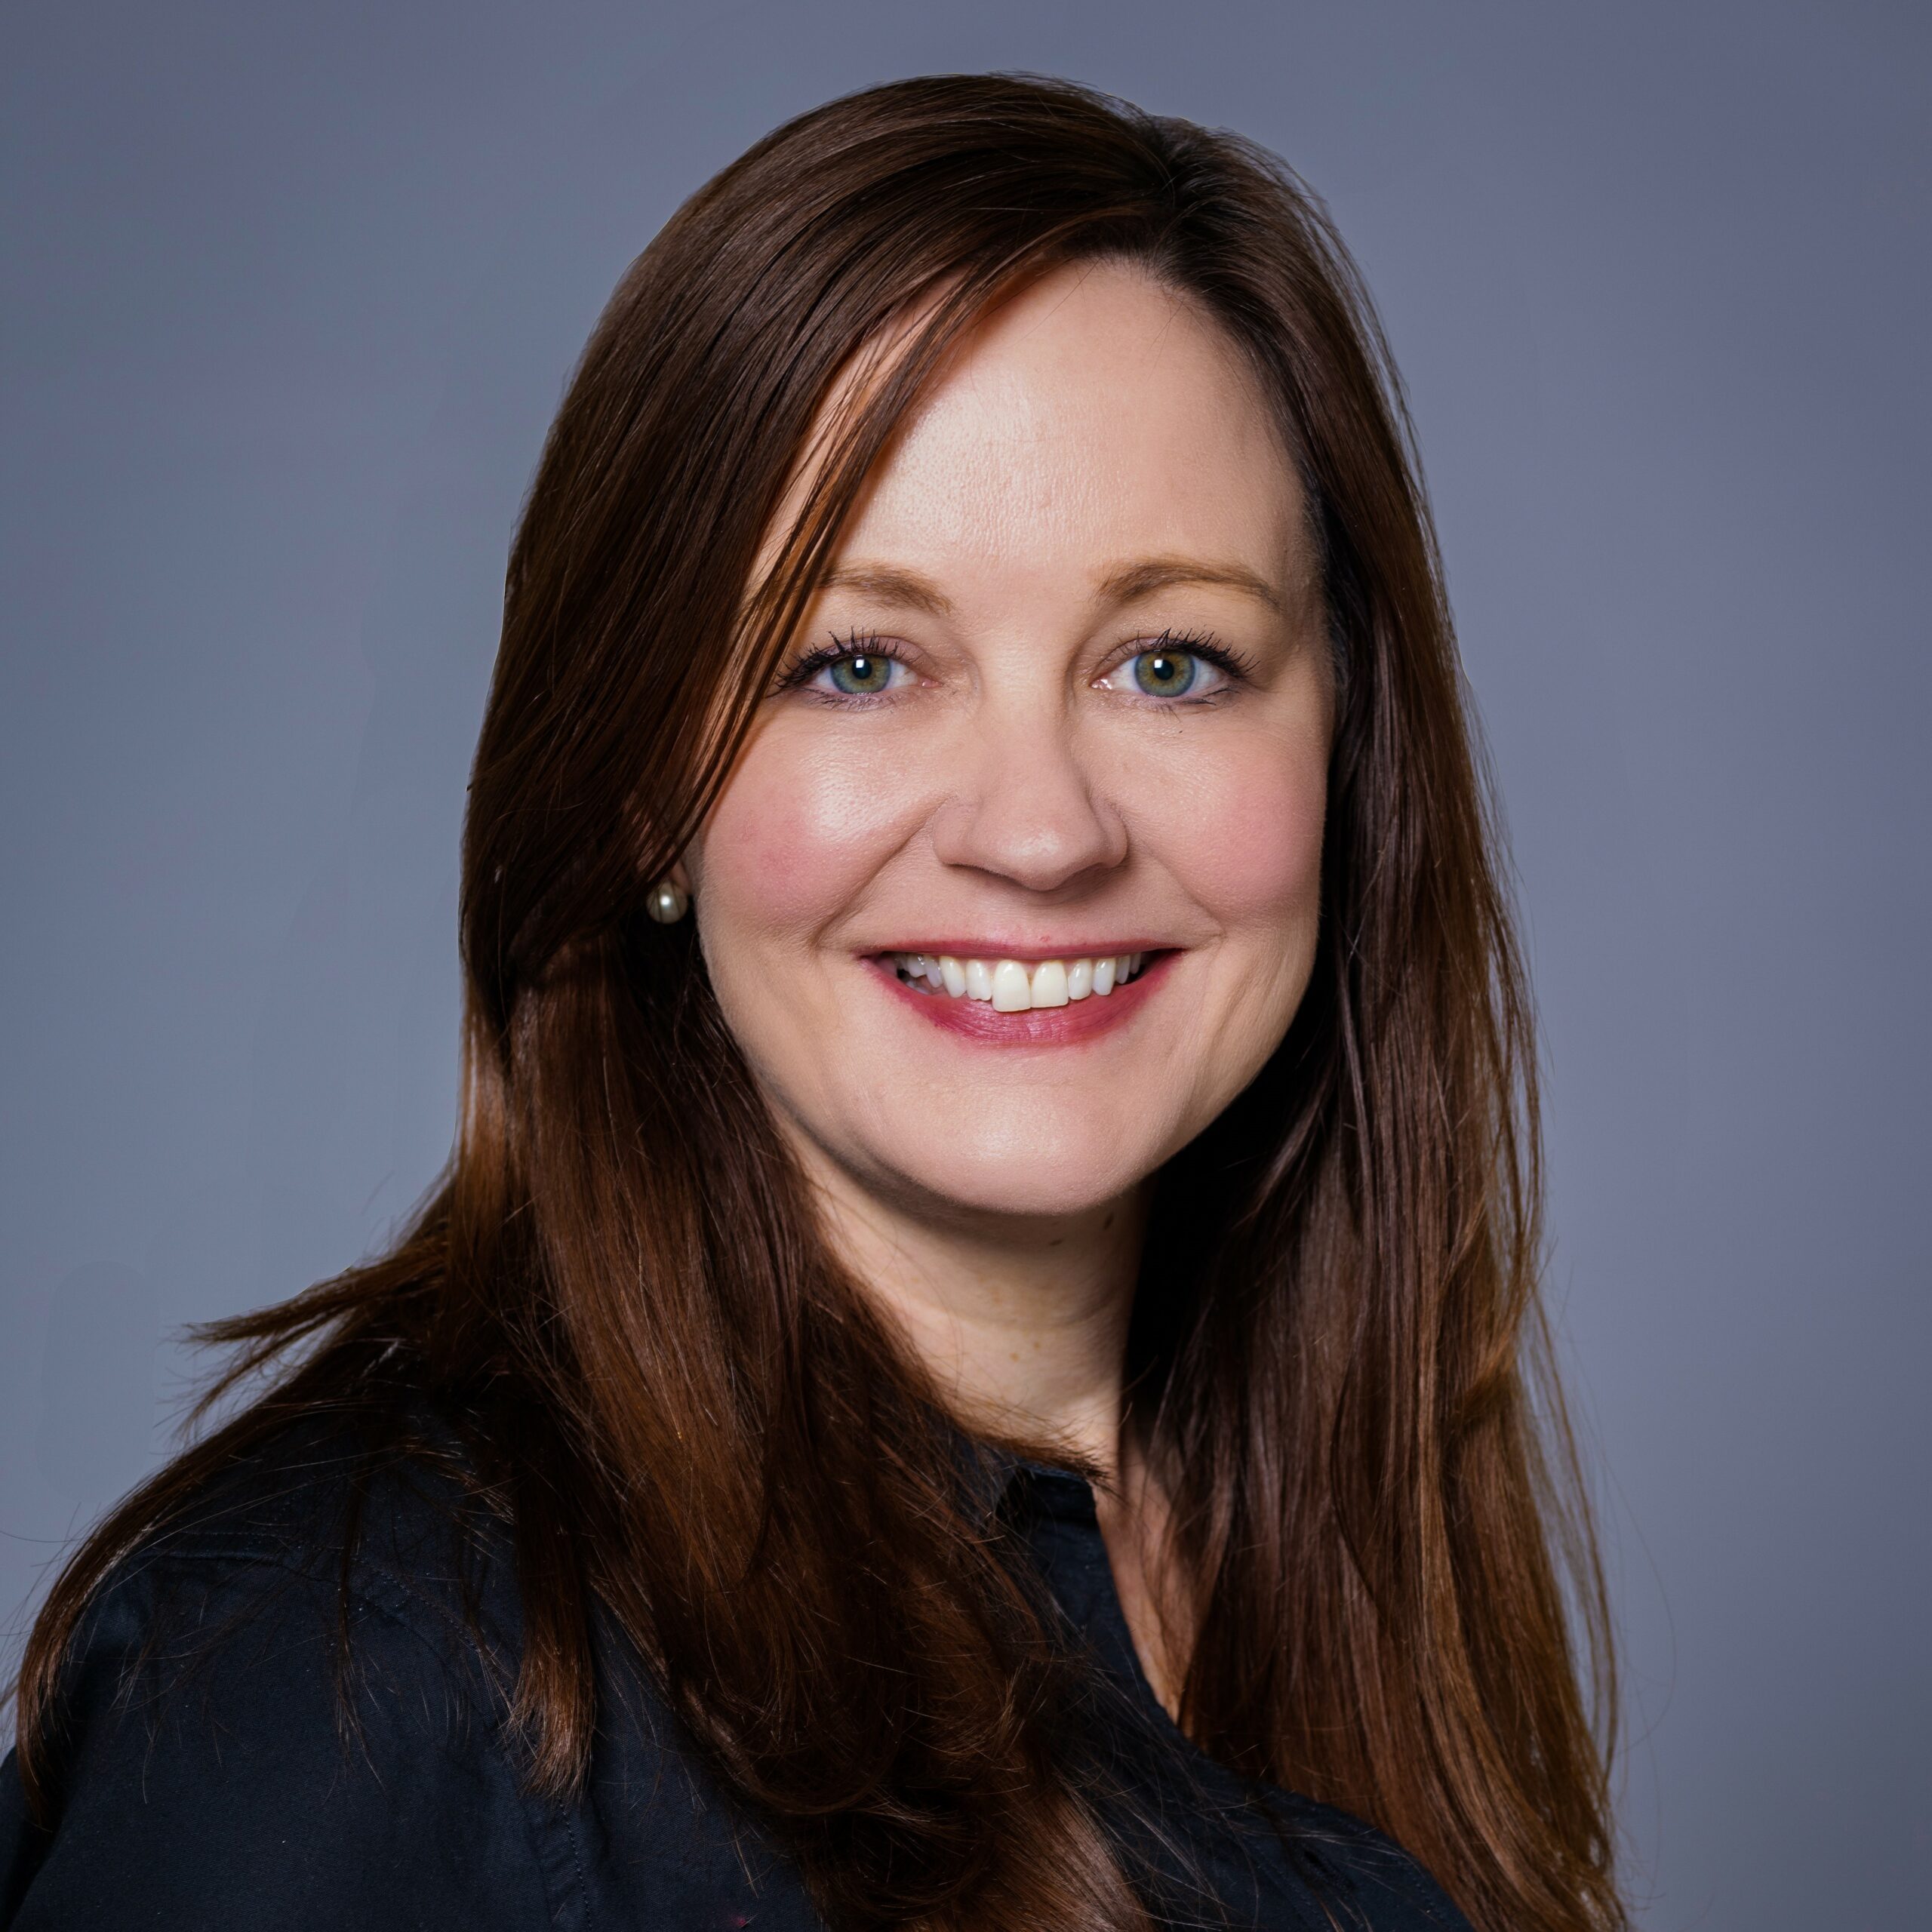 Teresa Hutson - Corporate Vice President, Technology for Fundamental Rights, Microsoft